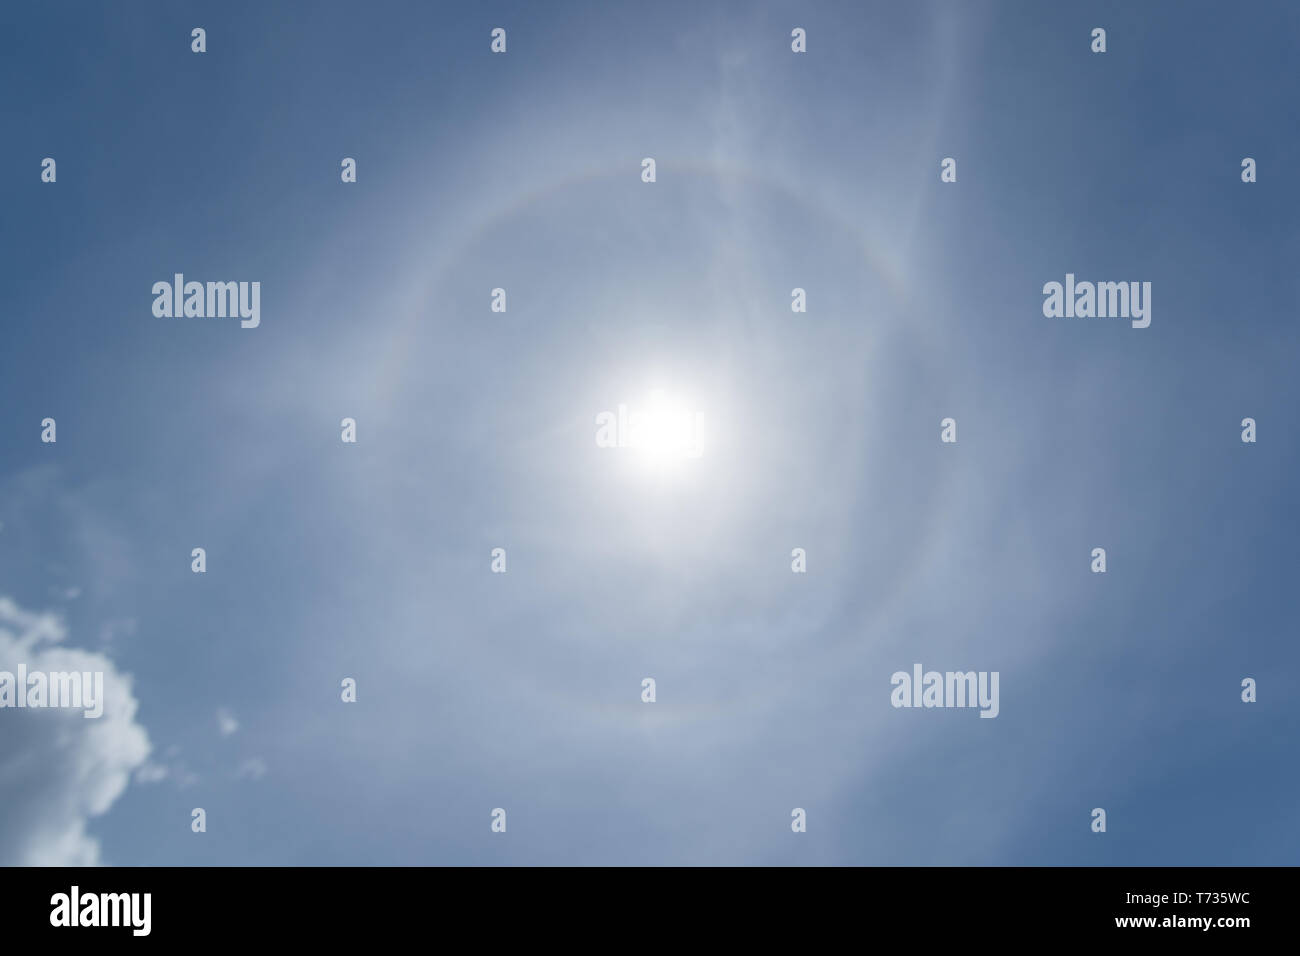 Santa Clara, Cuba. May 03, 2019: A solar halo visible in the sky at 13:42:24 Cuba time Stock Photo